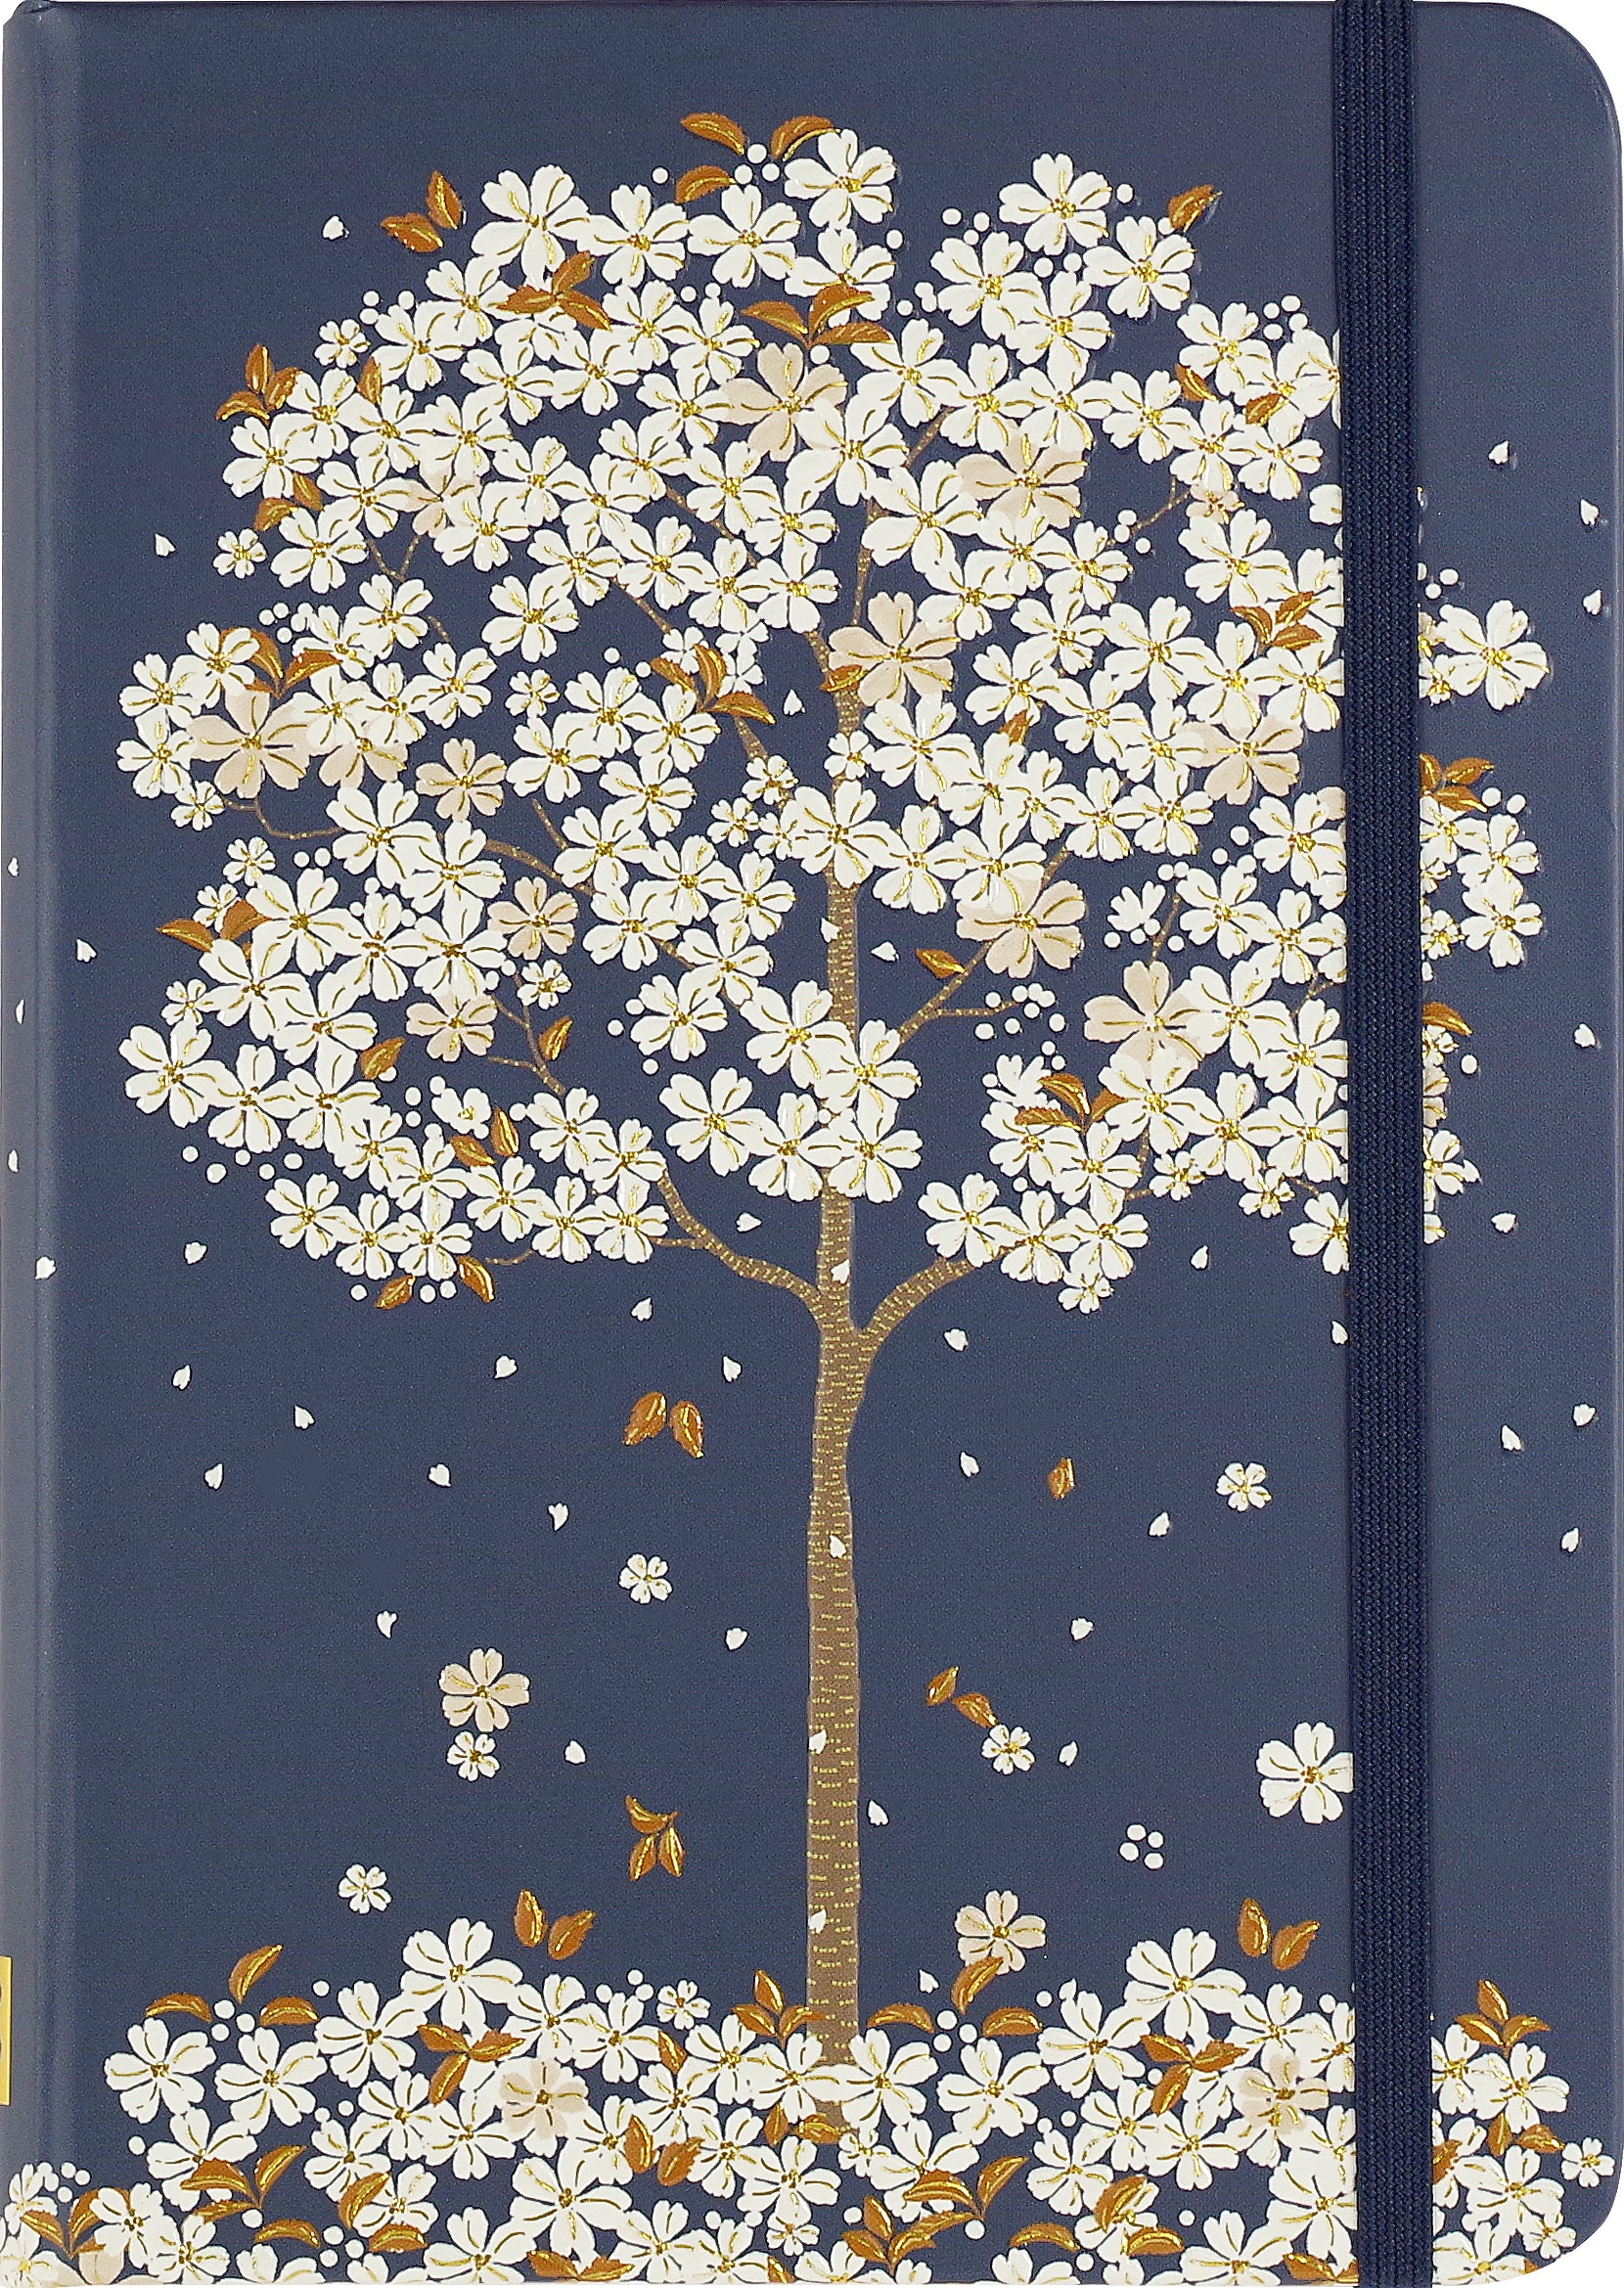 Journal - Falling Blossoms    